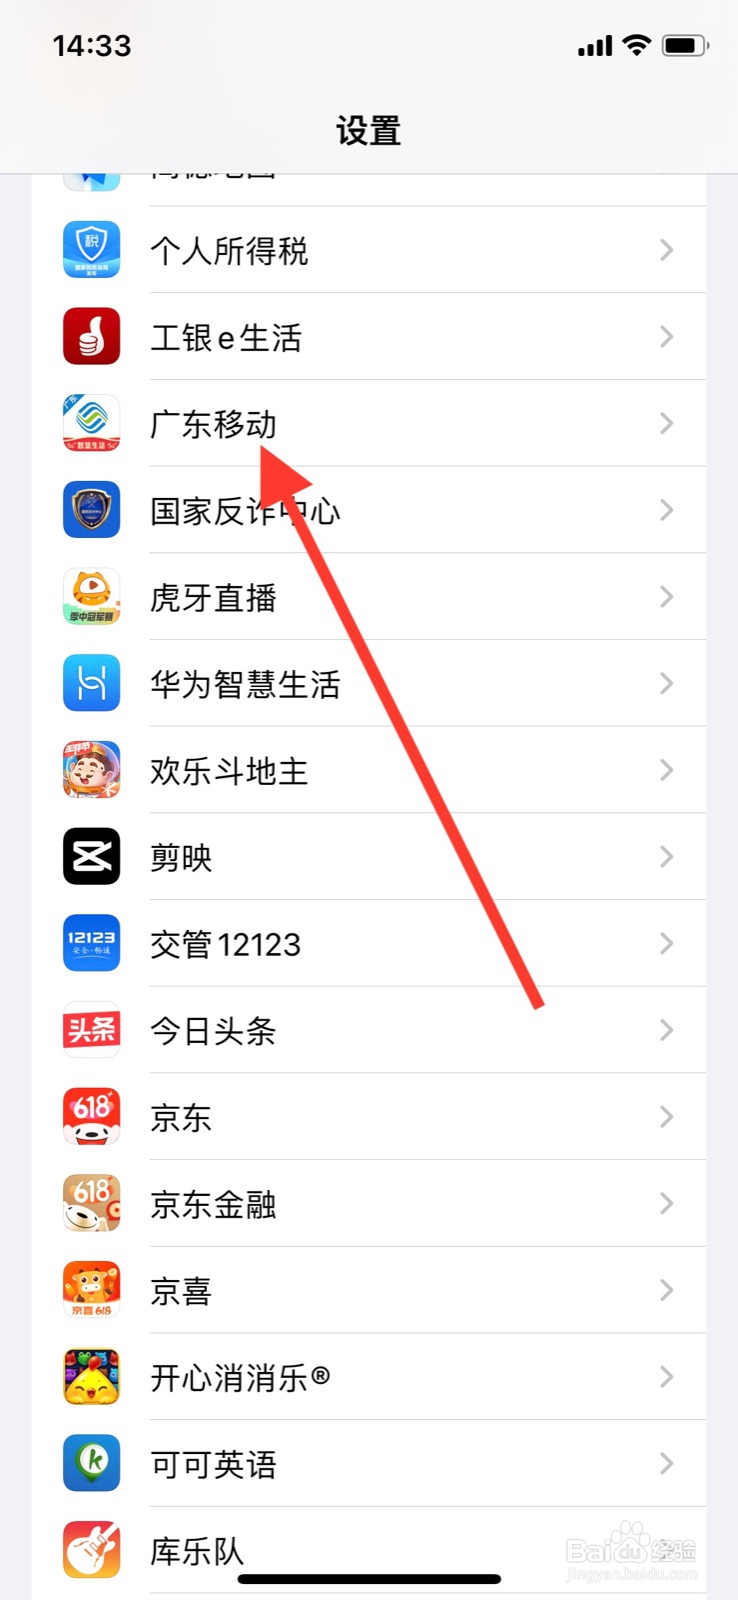 <b>iPhone打开“广东移动”app访问位置亲询问</b>